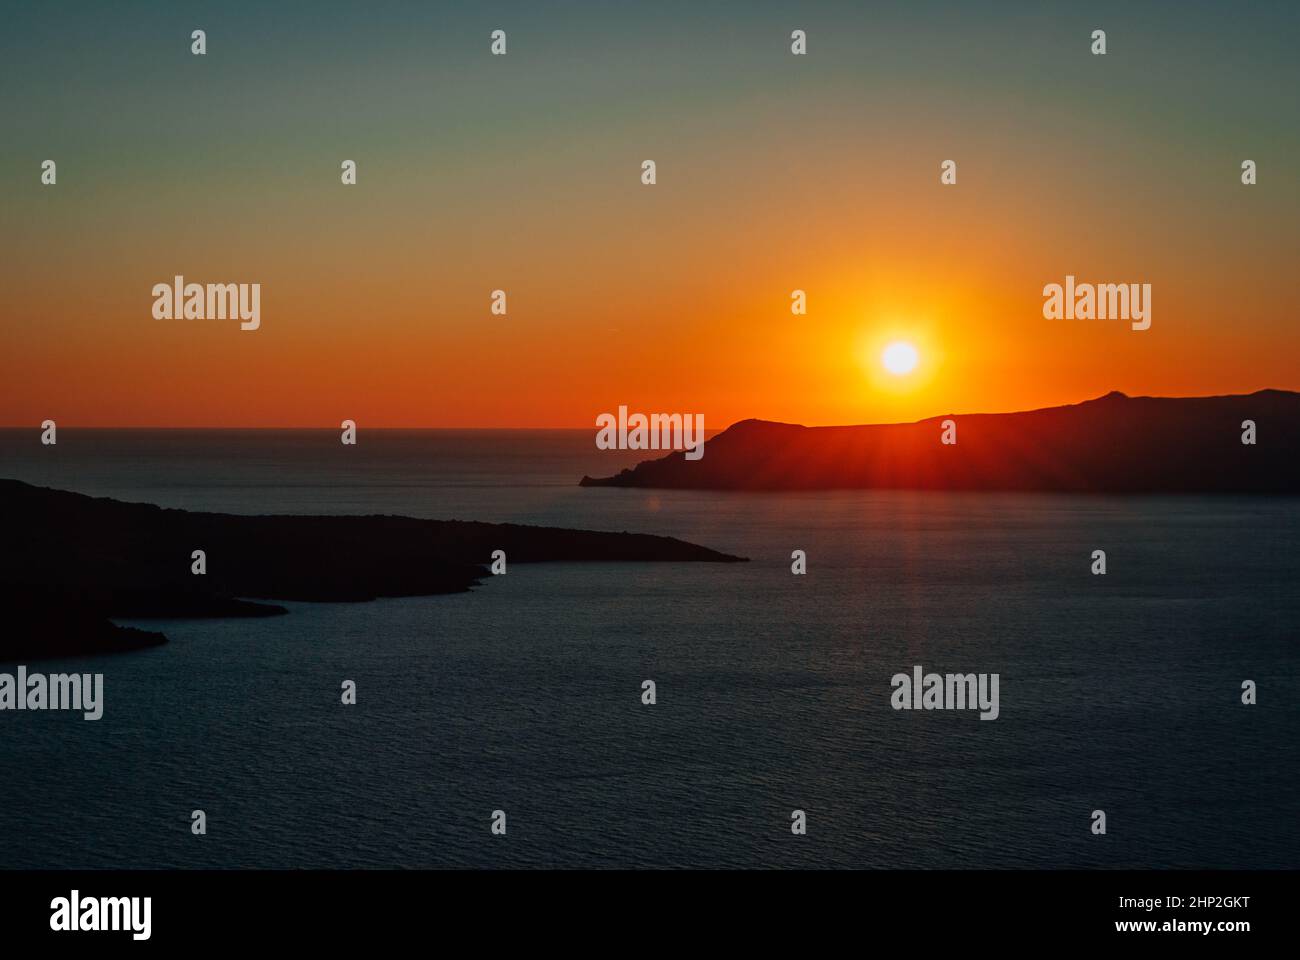 Sunset over the caldera on the island of Santorini, Greece. Stock Photo